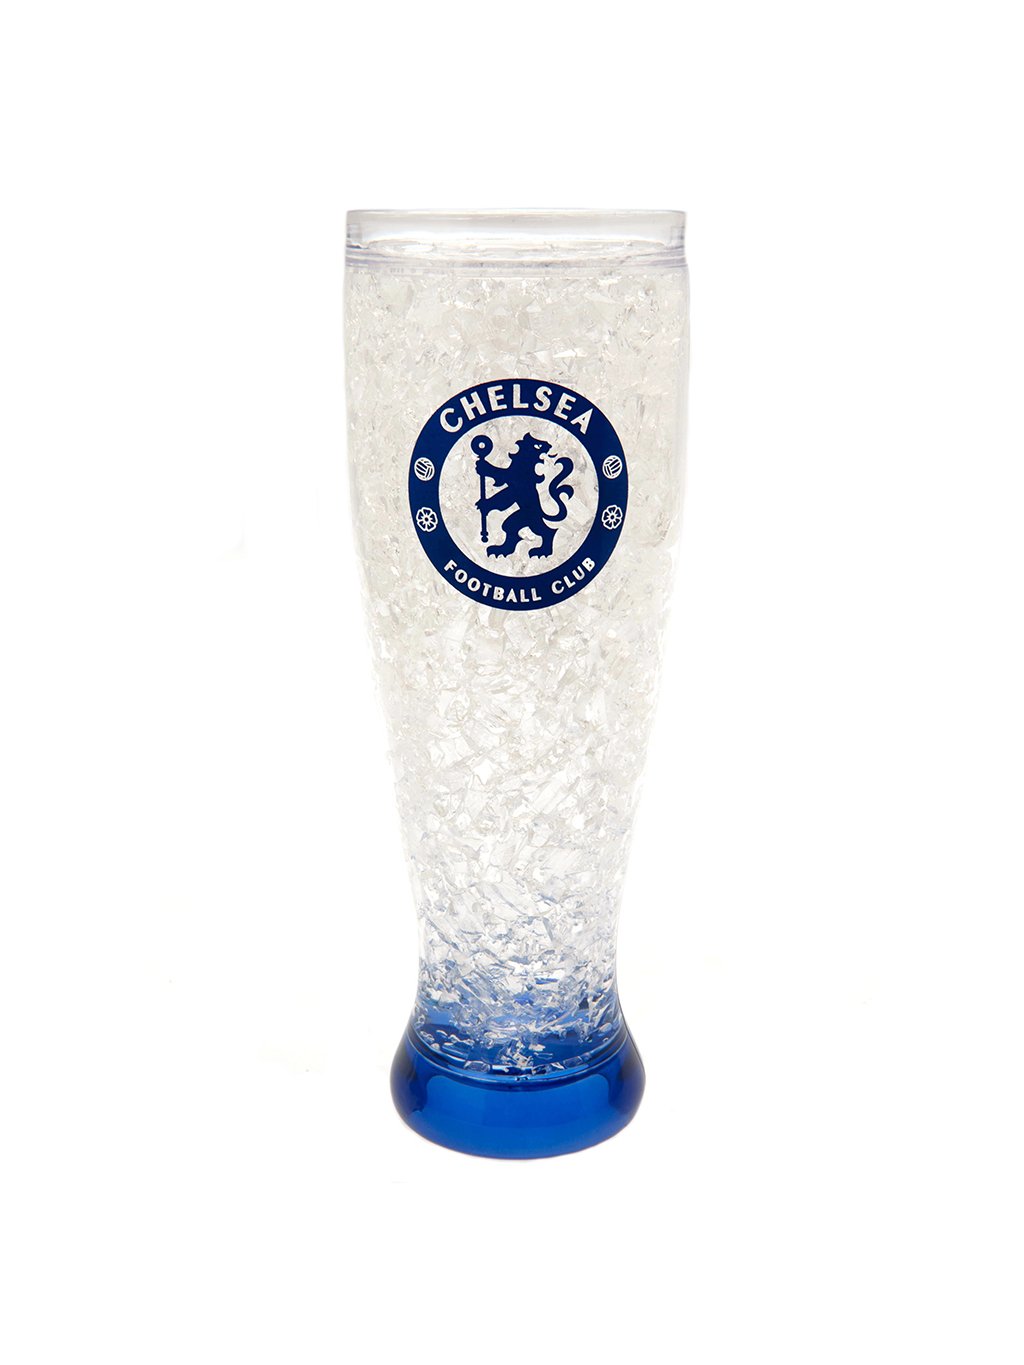 TM 01484 Chelsea FC Slim Freezer Mug